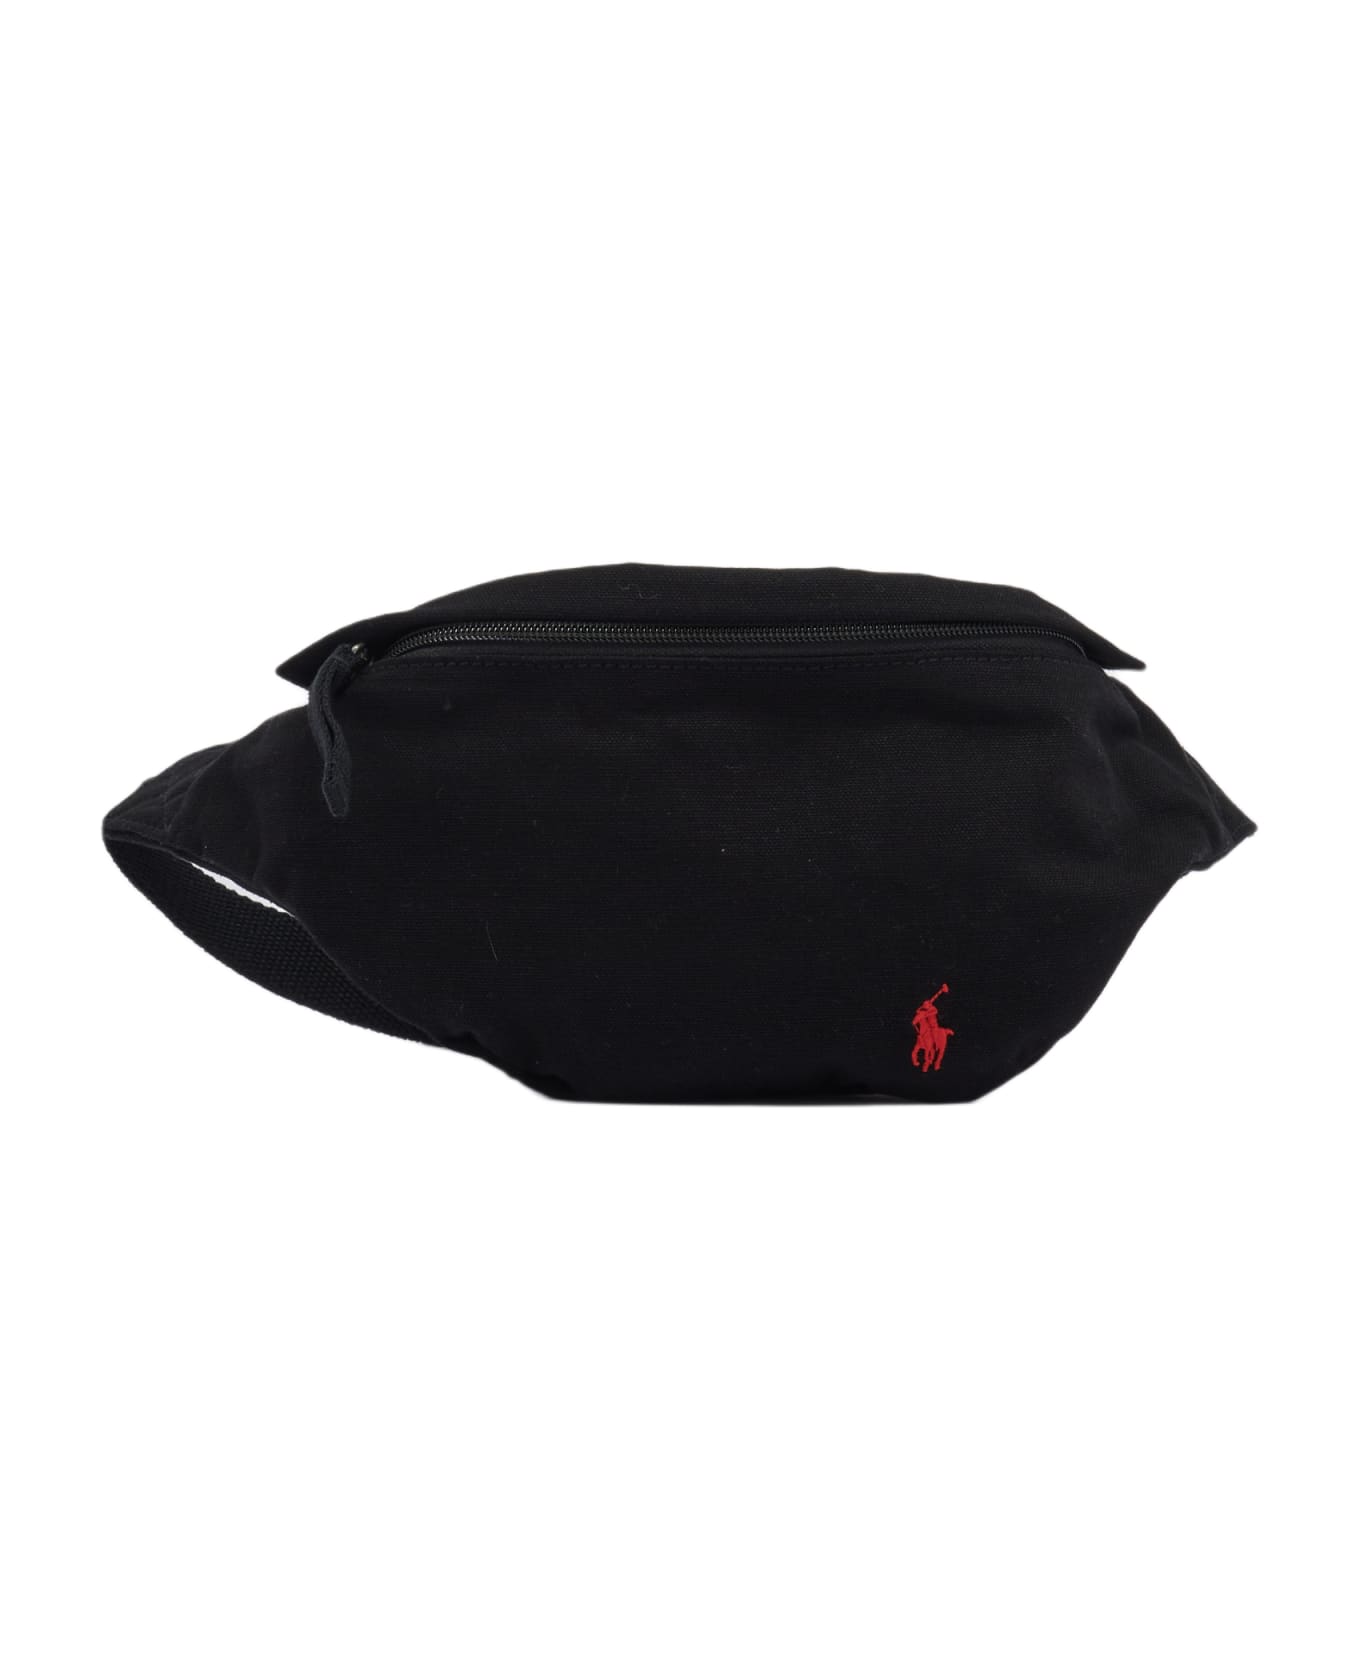 Polo Ralph Lauren Waist Bag-medium Shoulder Bag - NERO